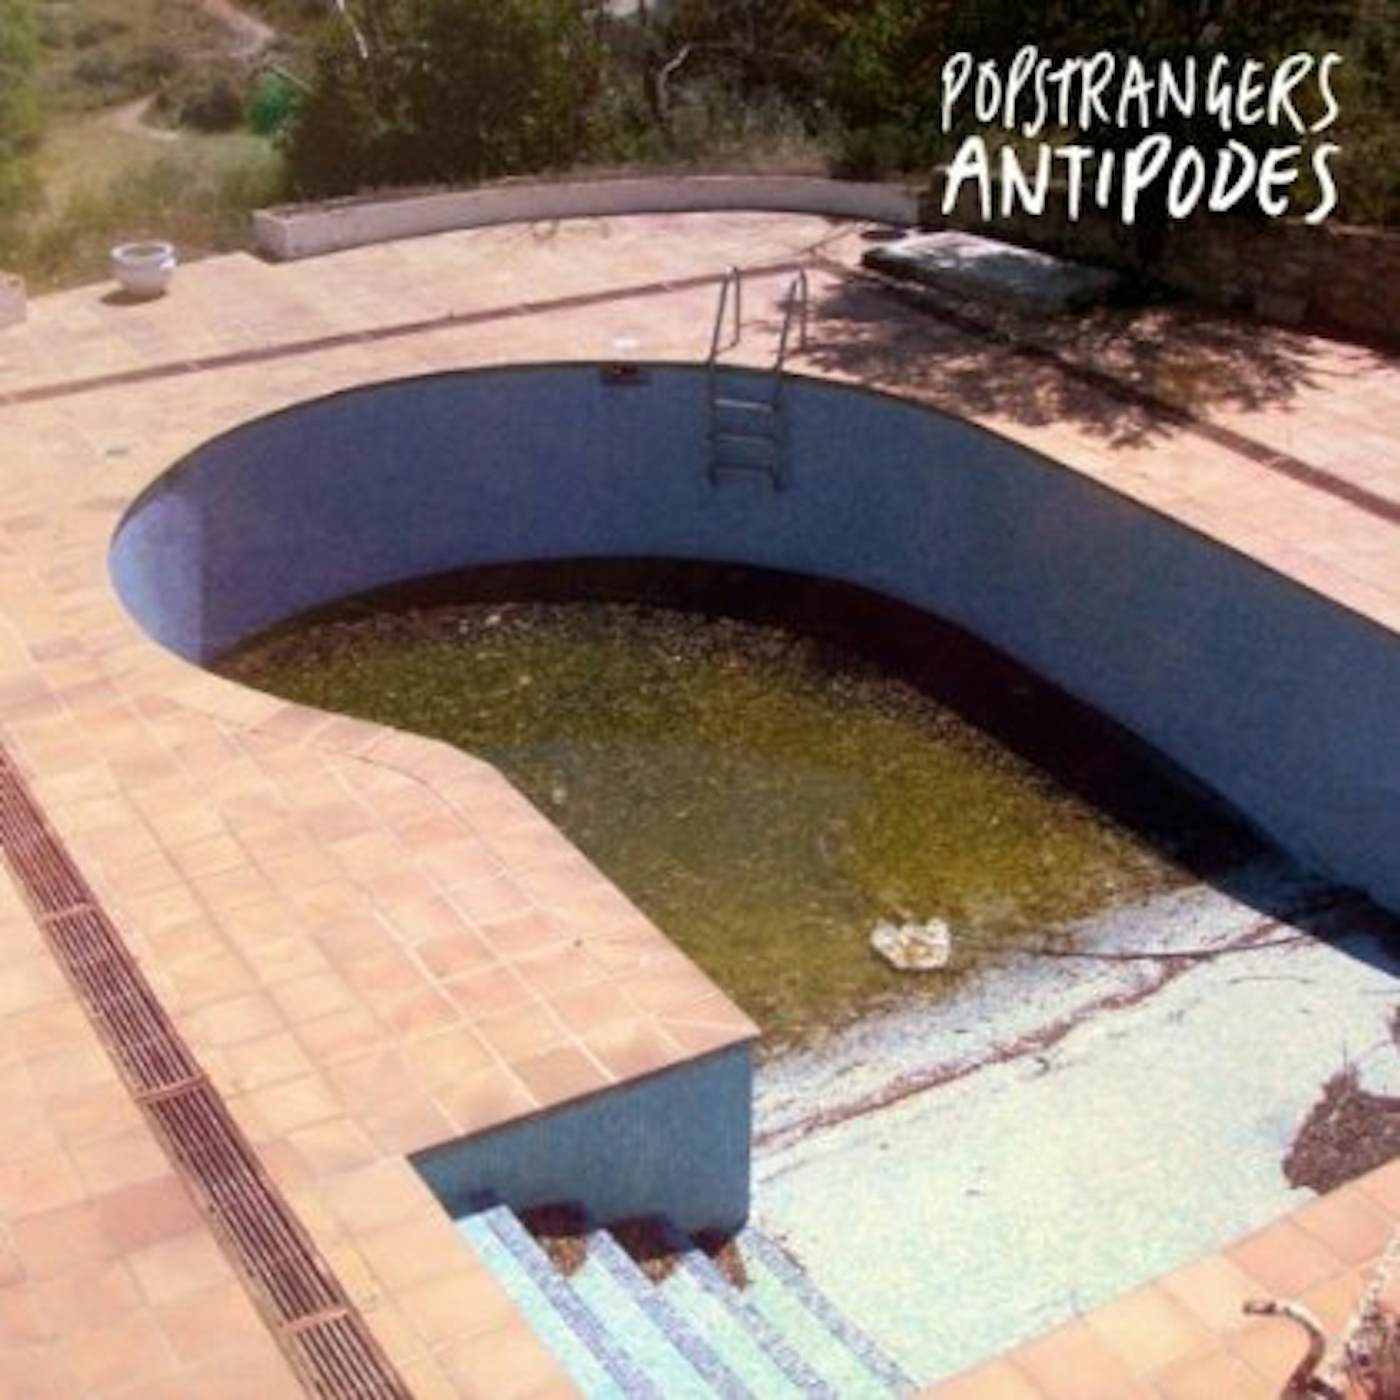 Popstrangers Antipodes Vinyl Record